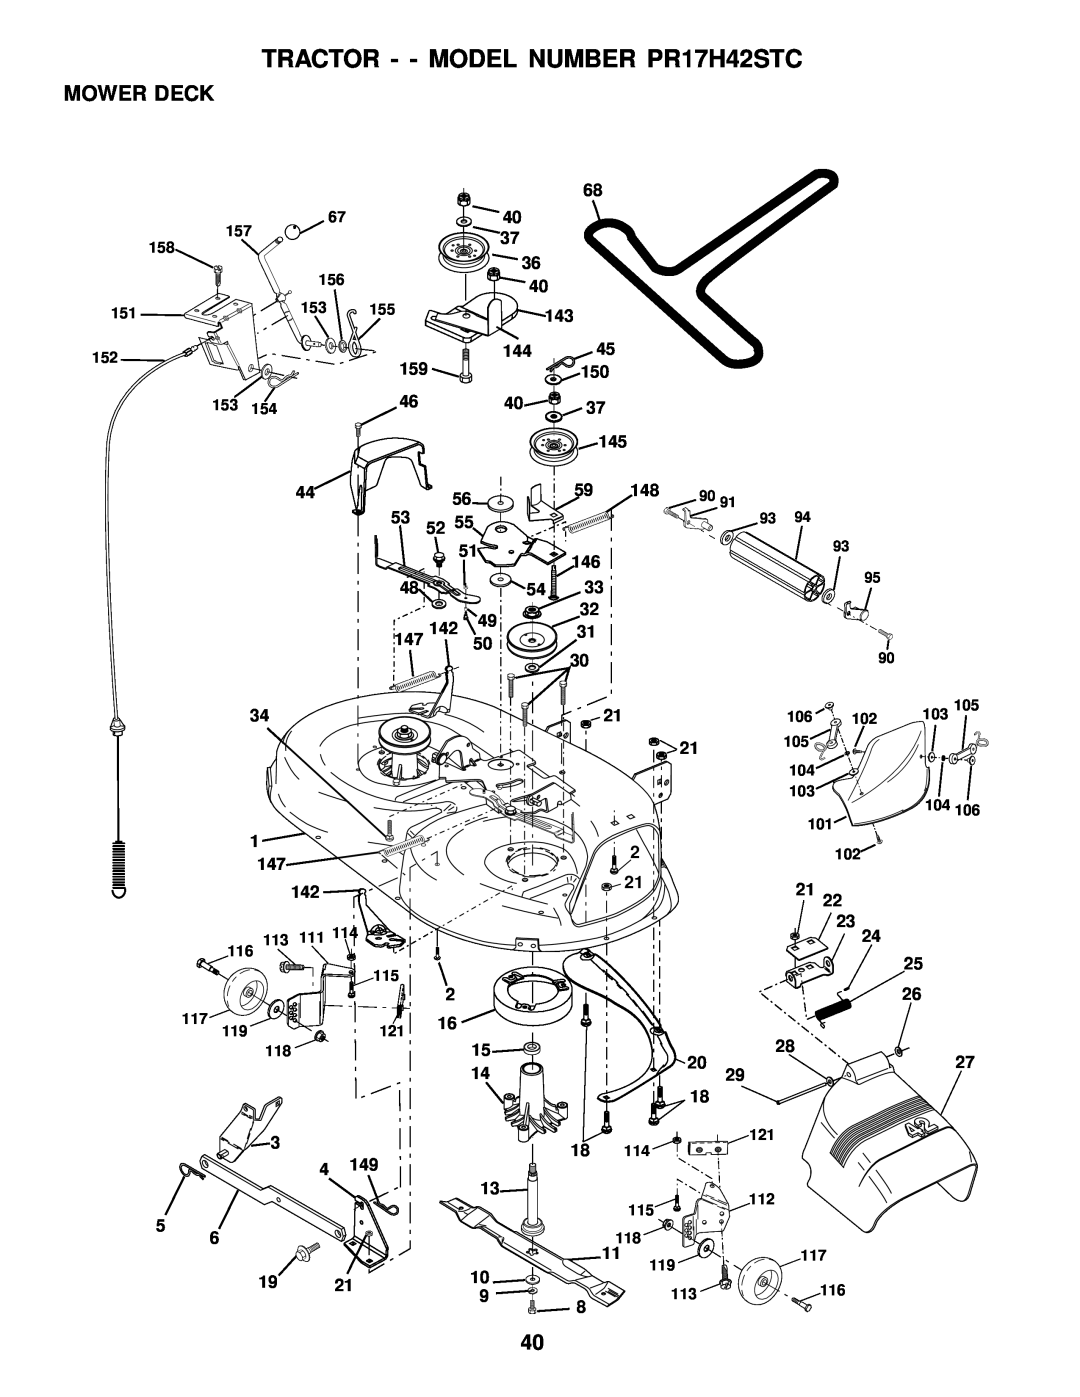 Poulan 178219 owner manual Mower Deck, TRACTOR - - MODEL NUMBER PR17H42STC 